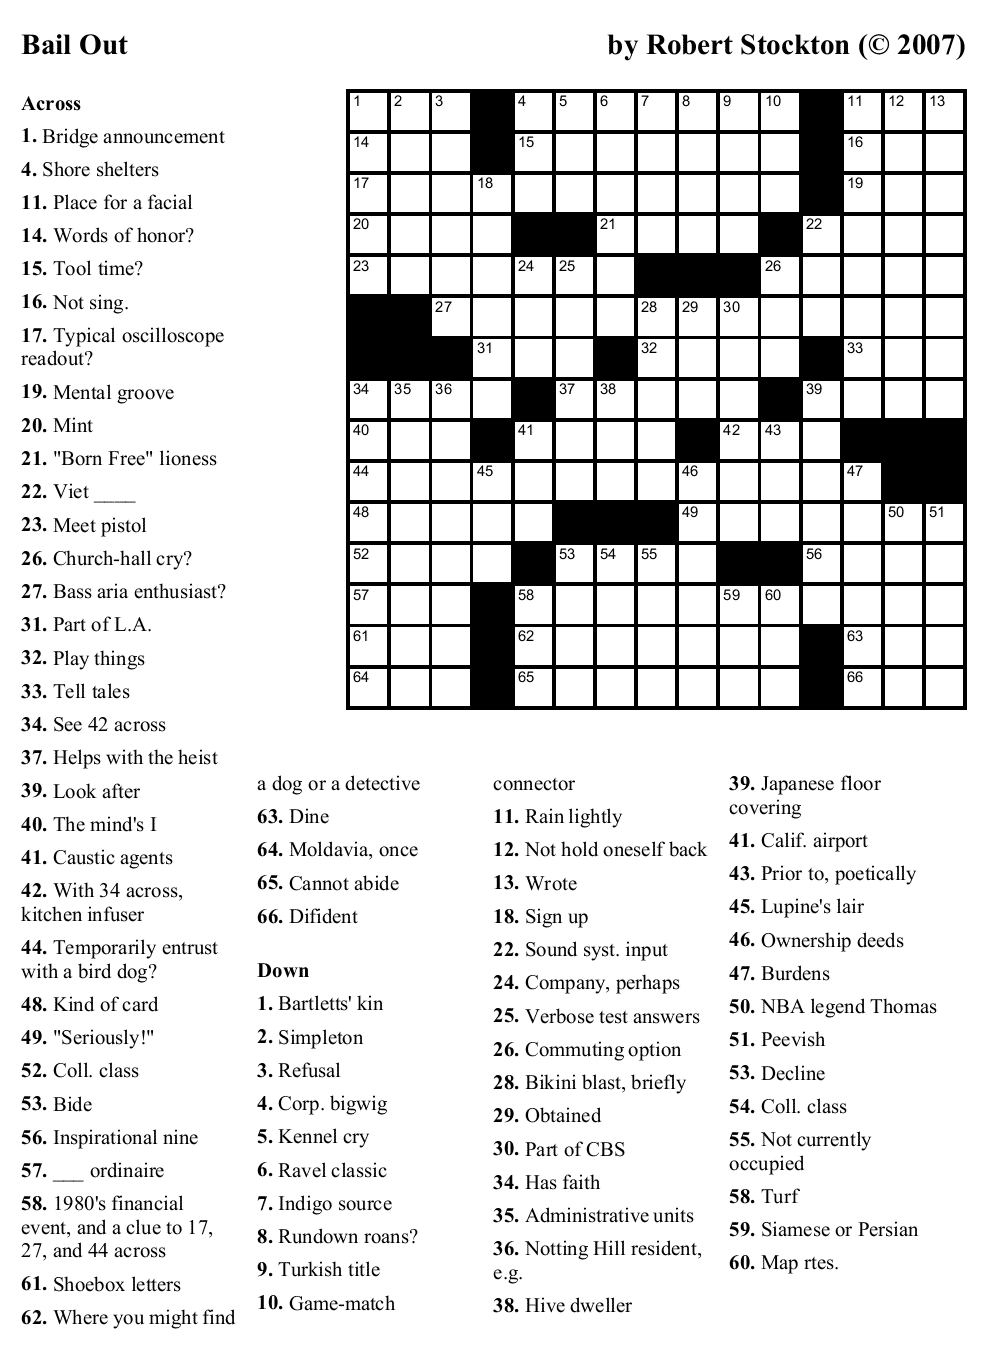 Printable Crossword #4